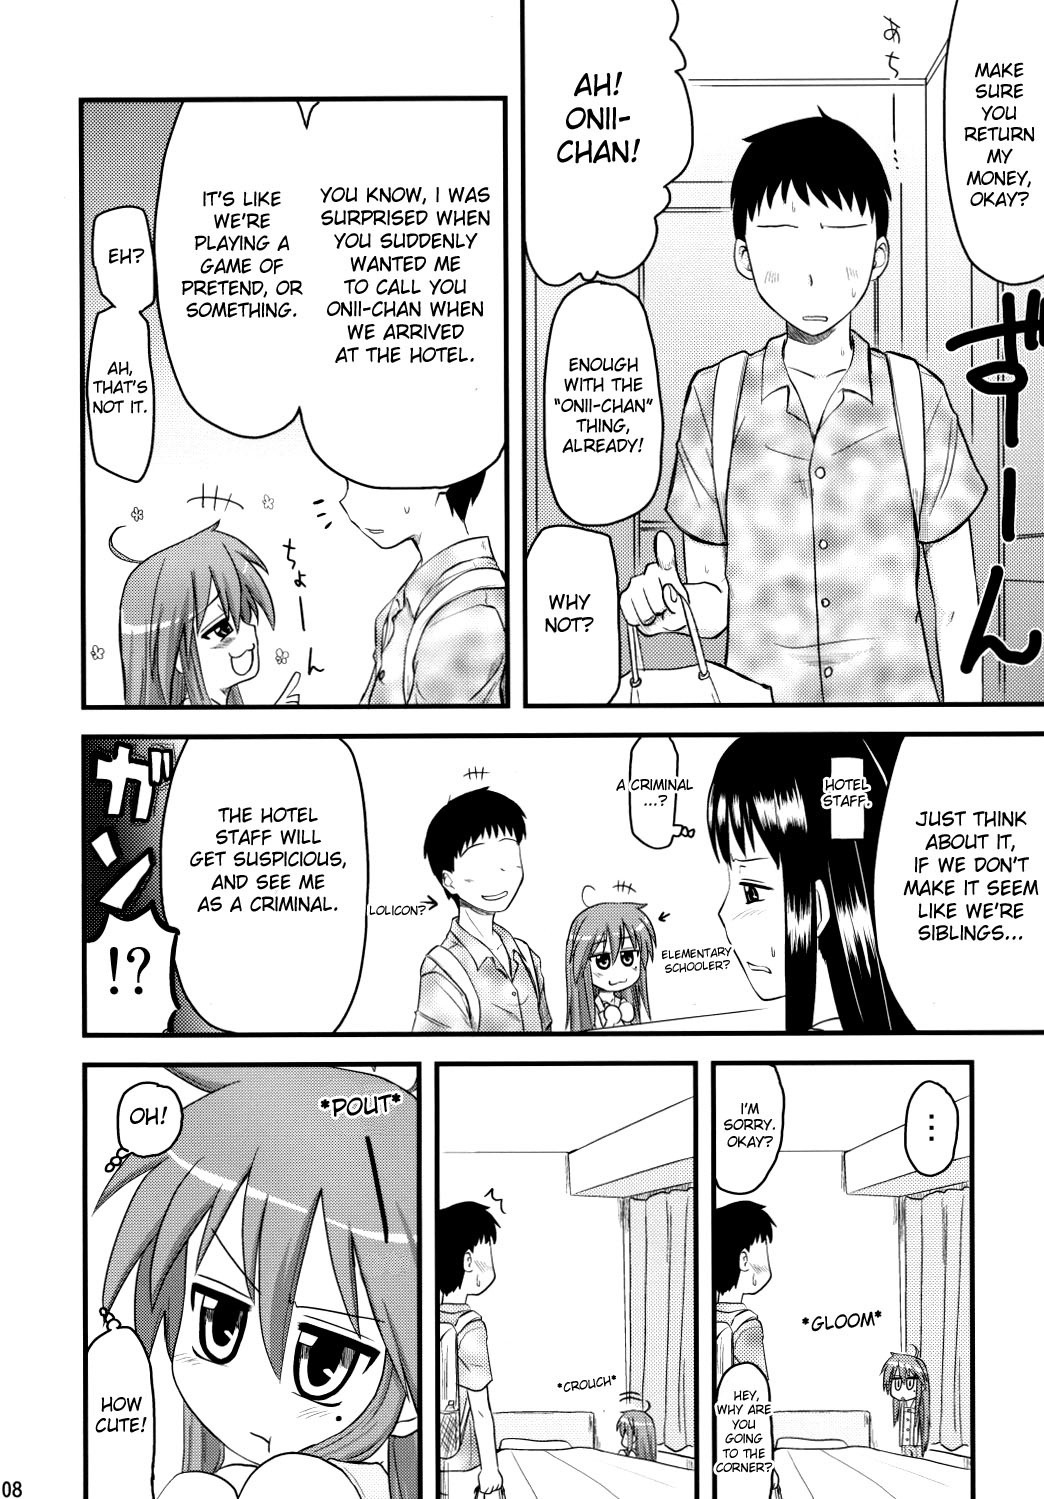 Konata and Oh-zu 4 people each and every one + 1 hentai manga picture 4